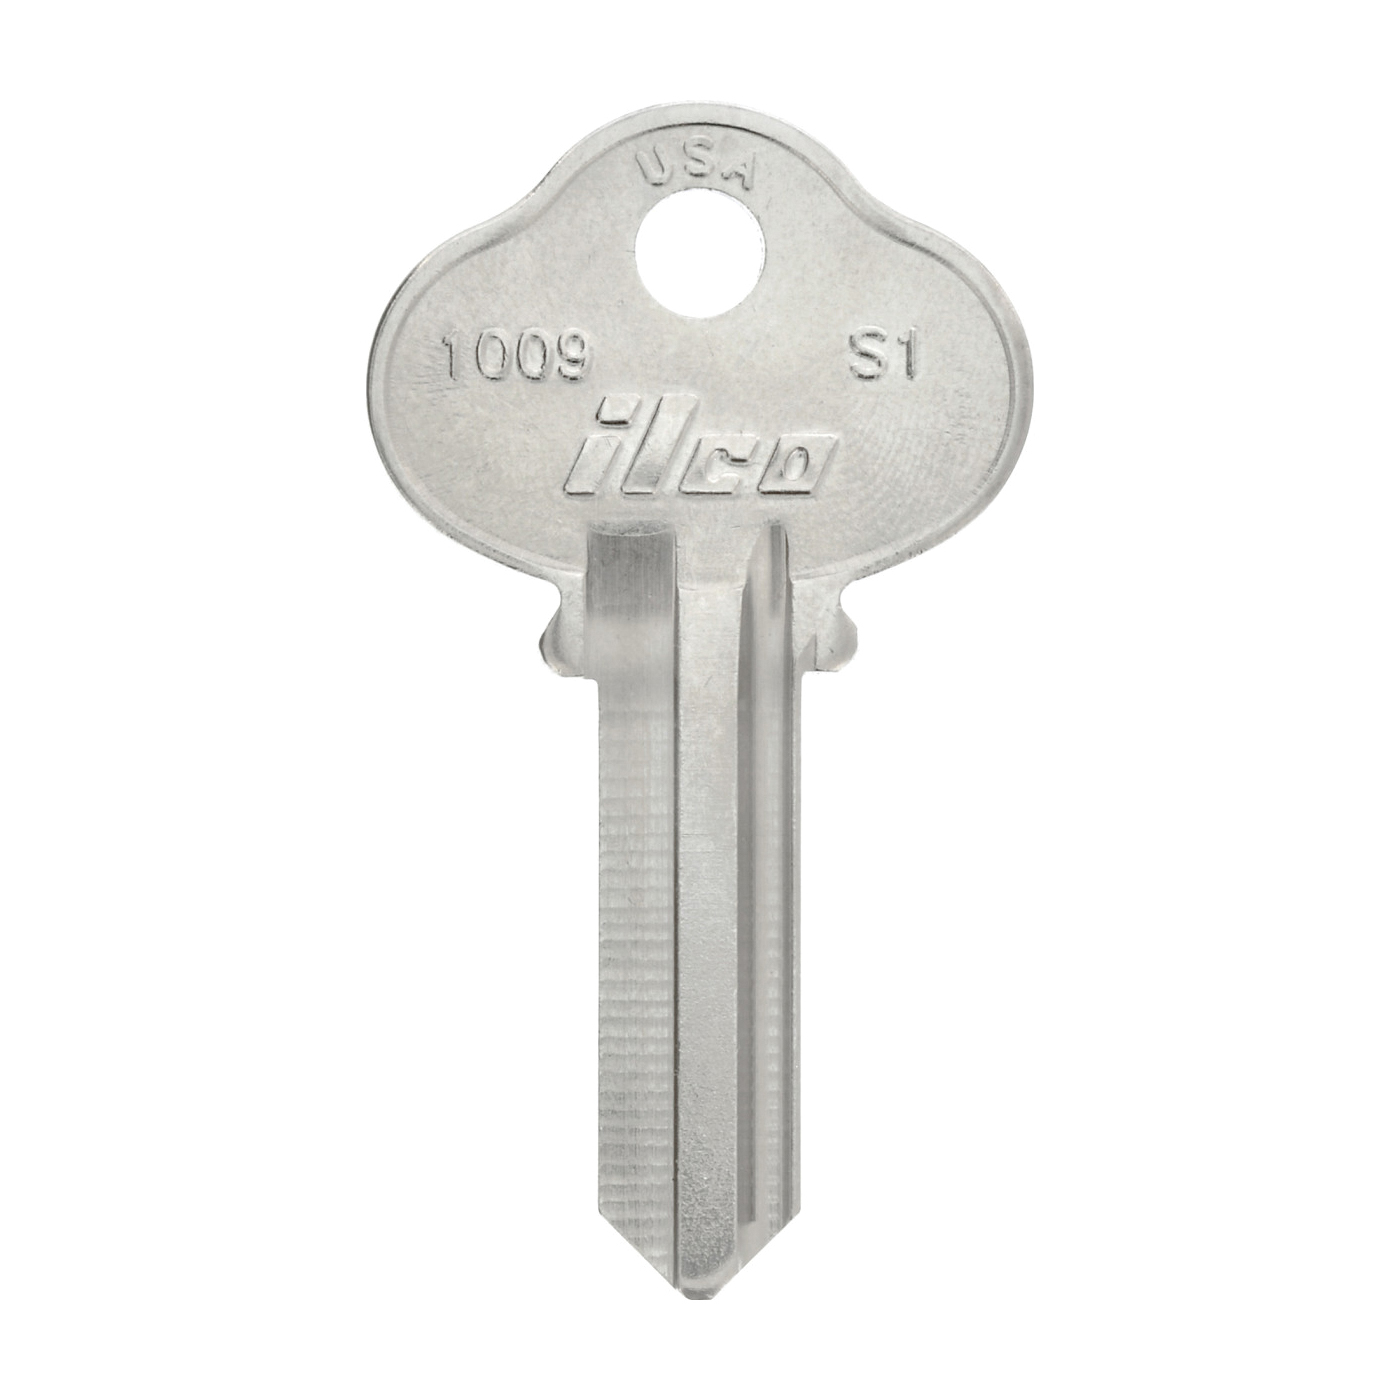 441700 Key, For: Sargent Locks